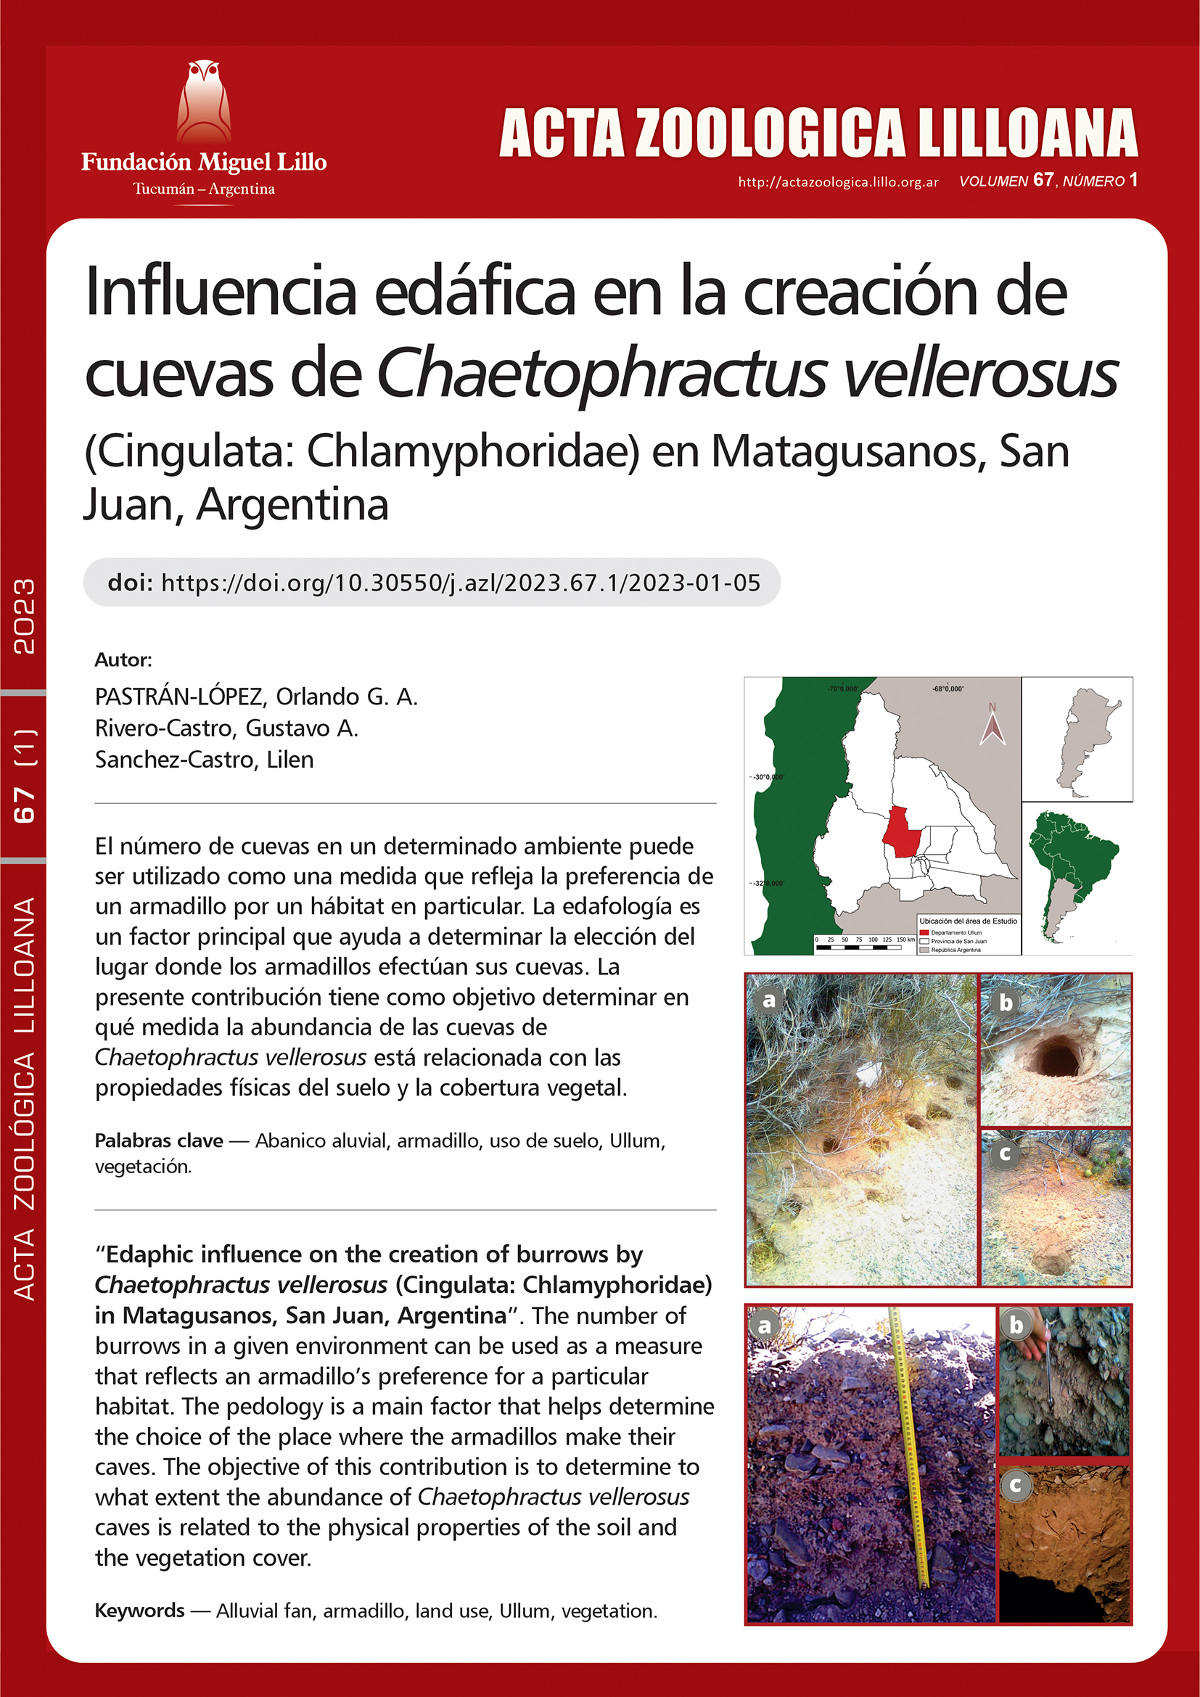 Influencia edáfica en la creación de cuevas de Chaetophractus vellerosus (Cingulata: Chlamyphoridae) en Matagusanos, San Juan, Argentina